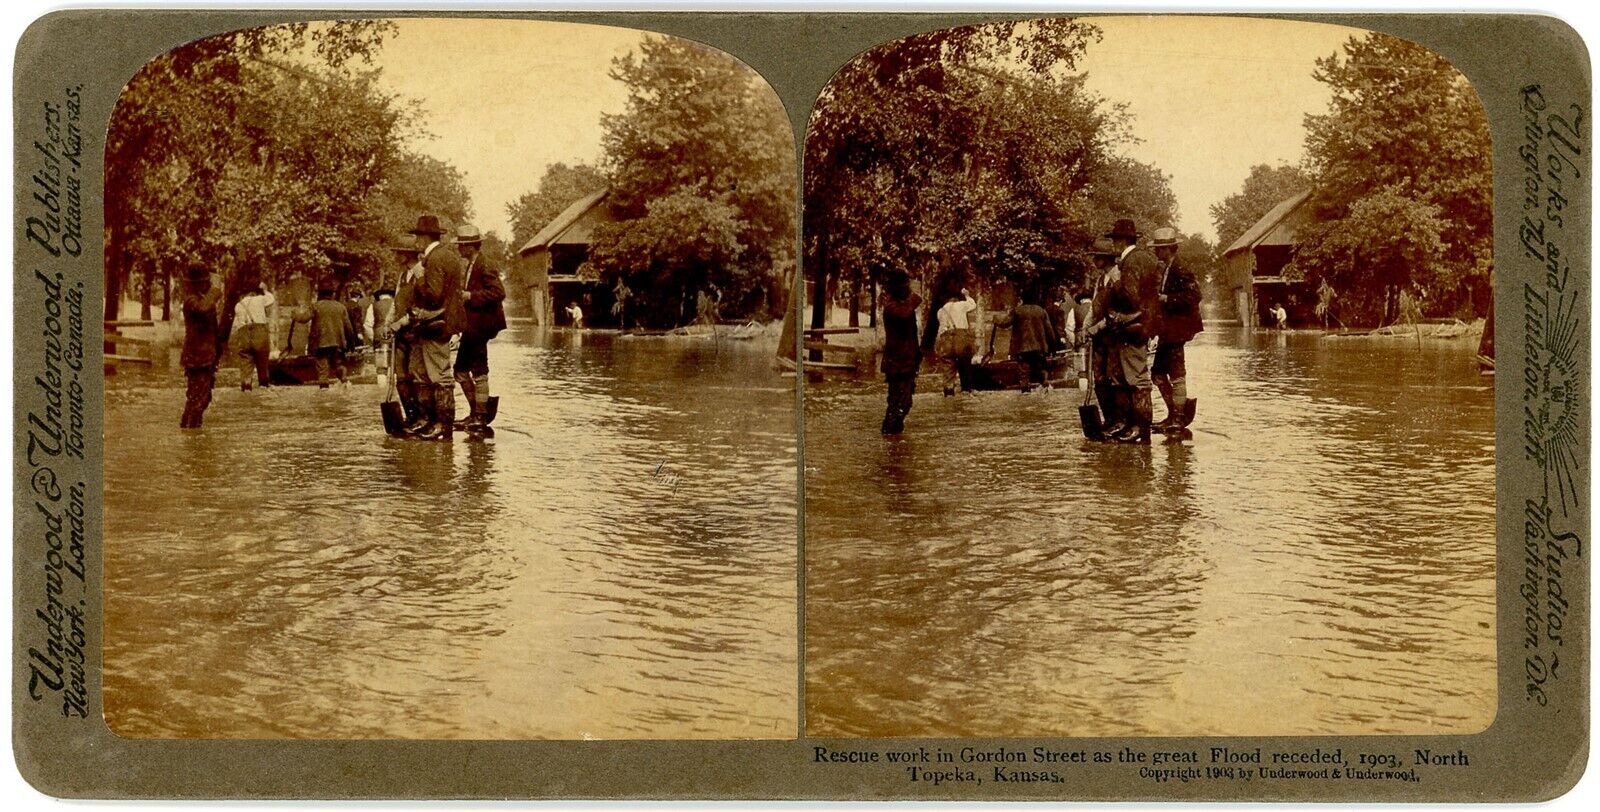 KANSAS SV - Topeka Flood - Gordon Street Rescuers - Underwood c1903